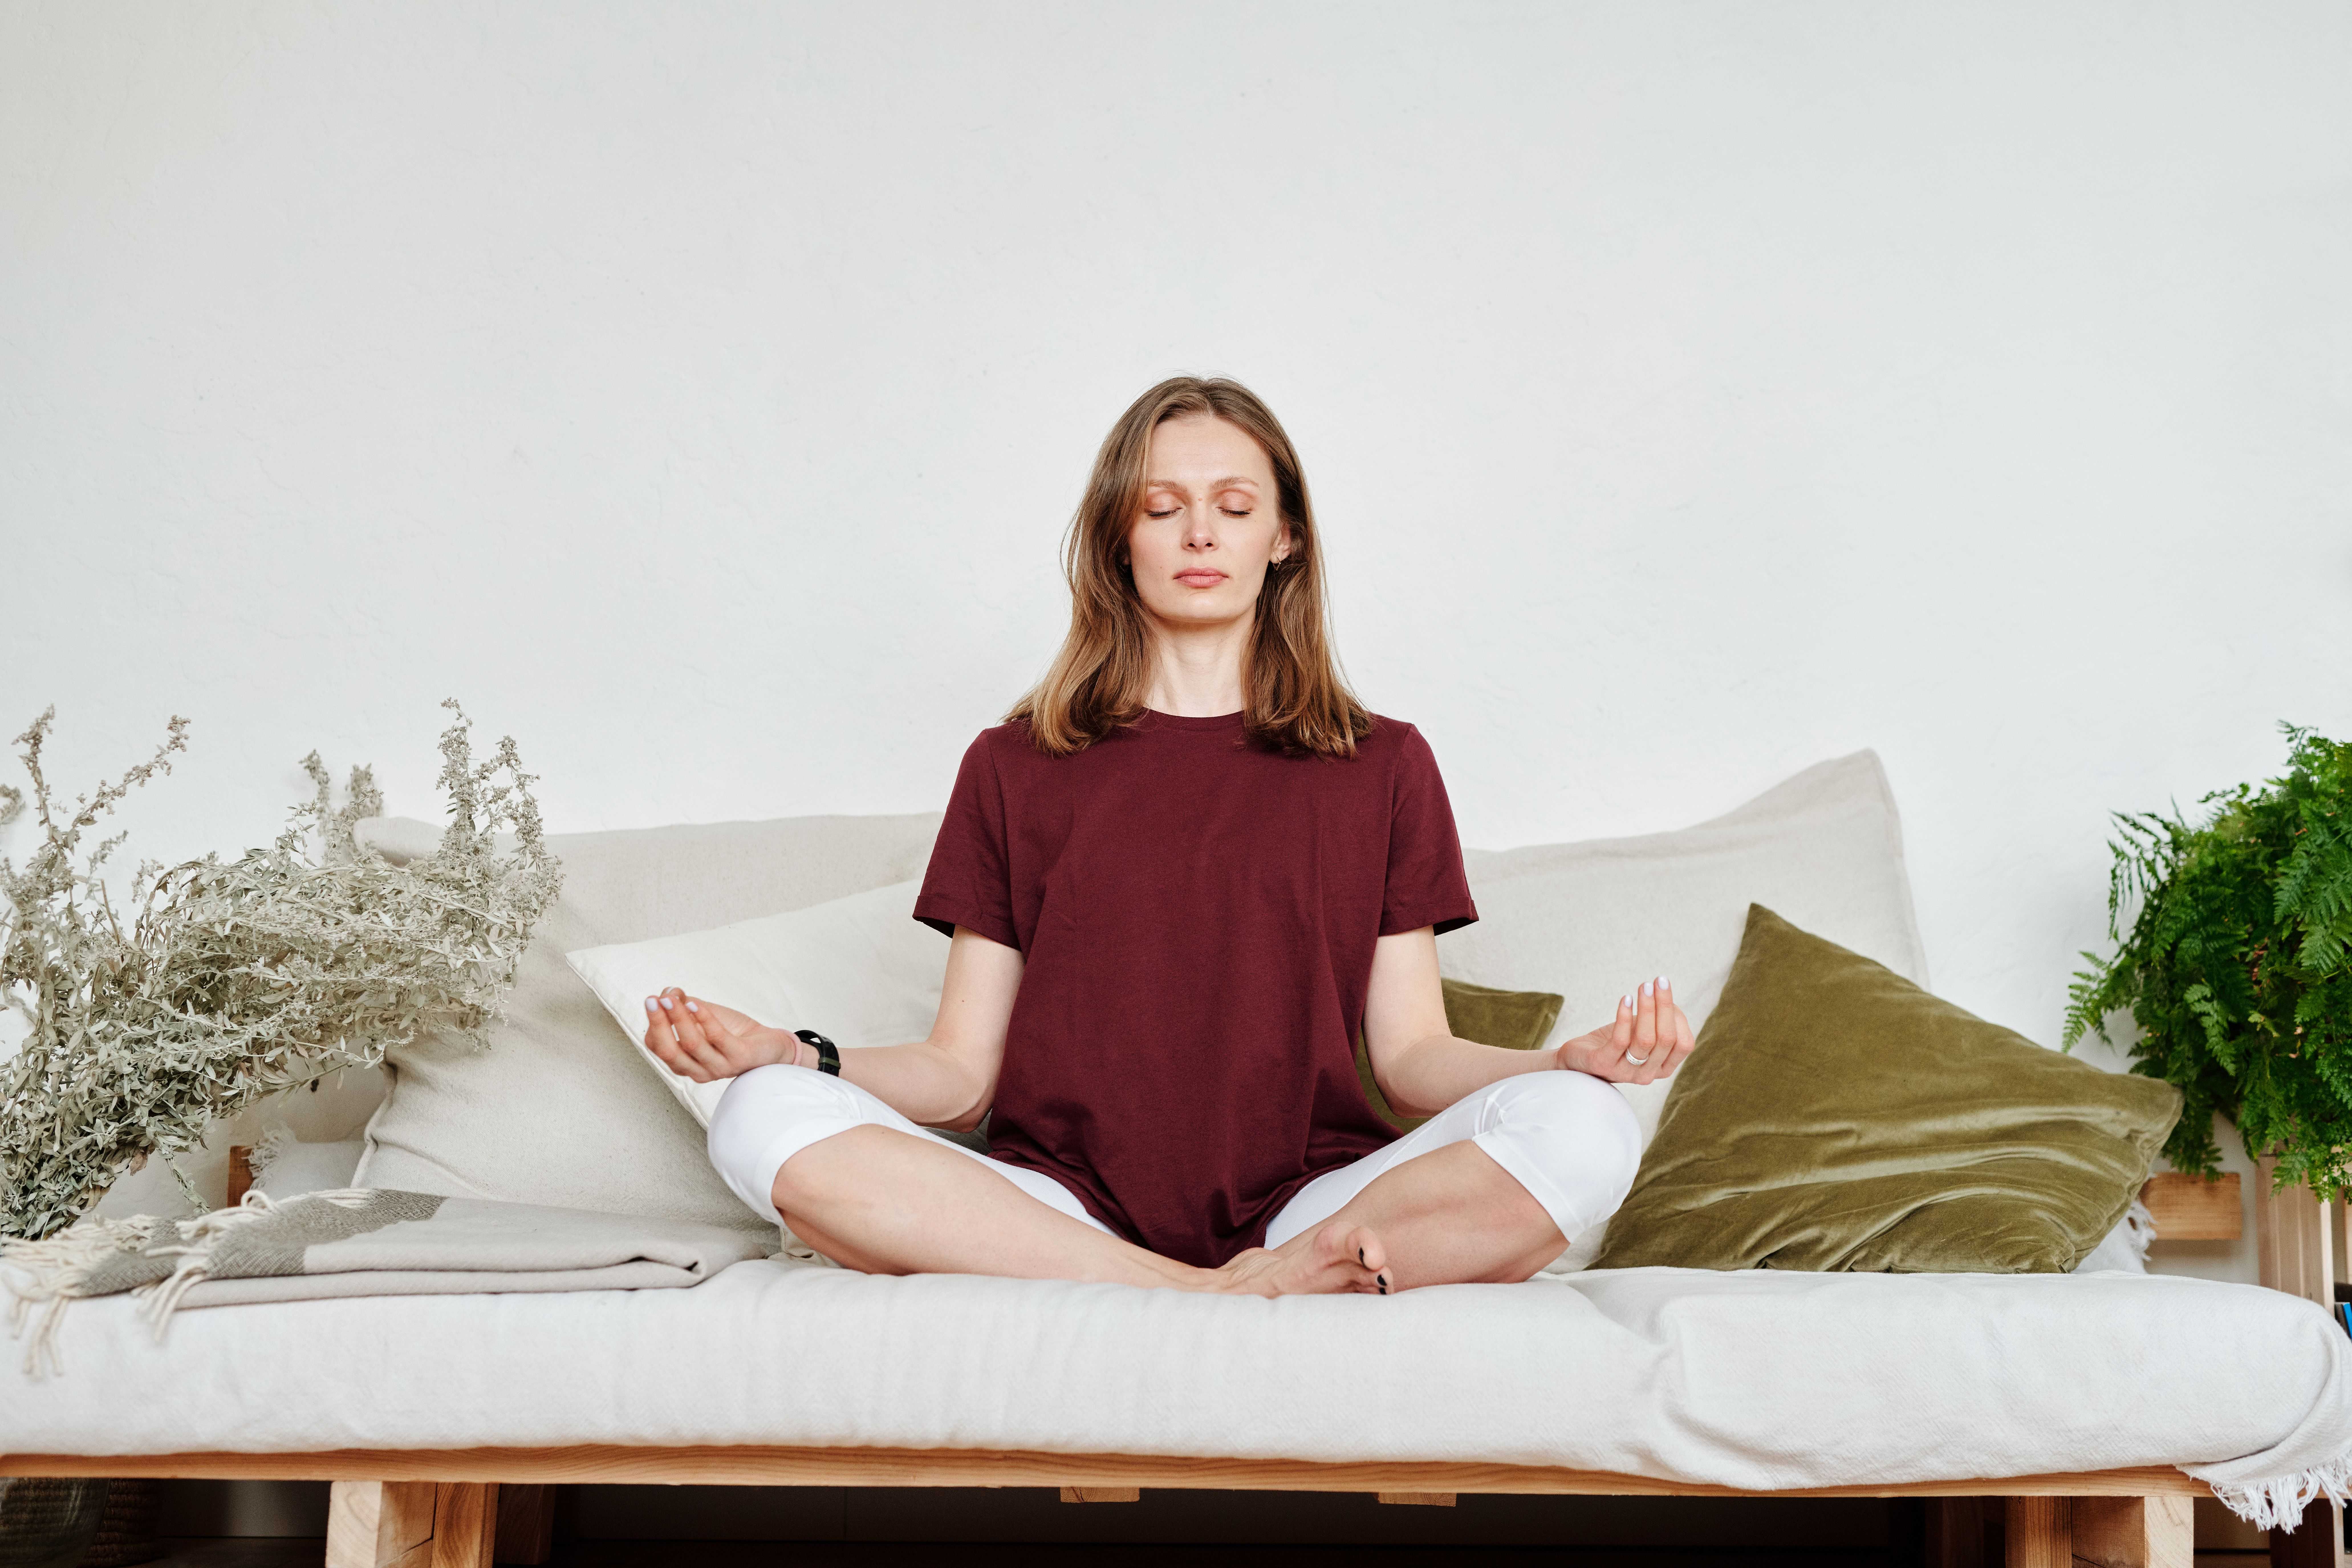 Image of a woman meditating